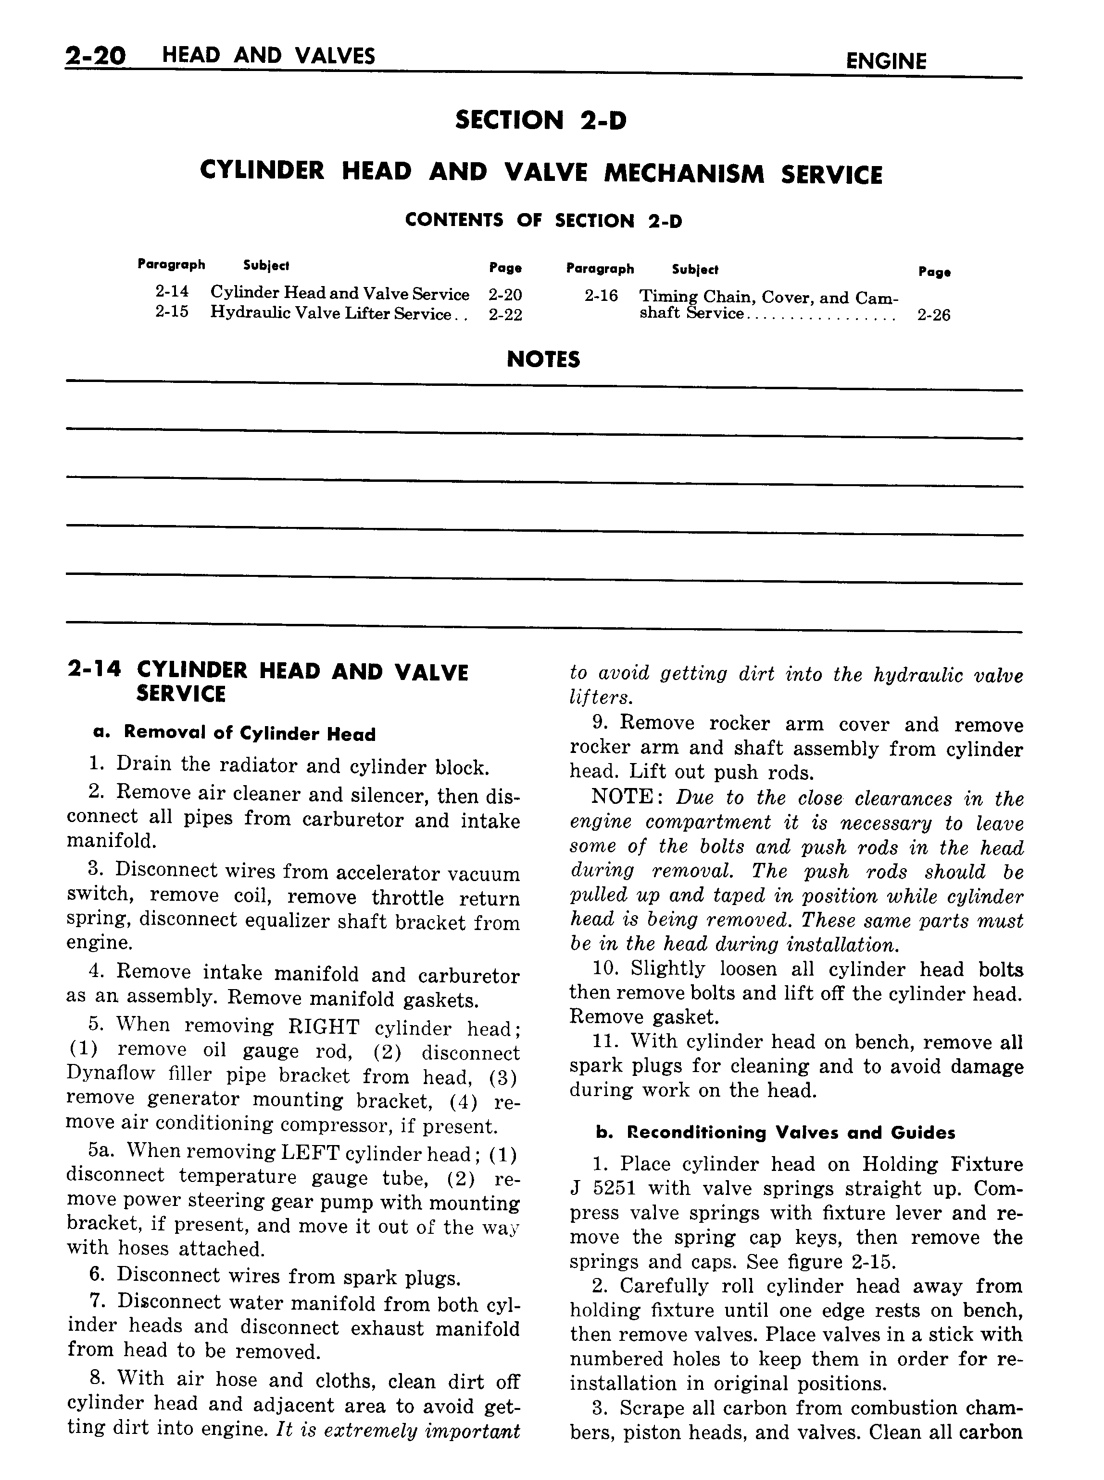 n_03 1957 Buick Shop Manual - Engine-020-020.jpg